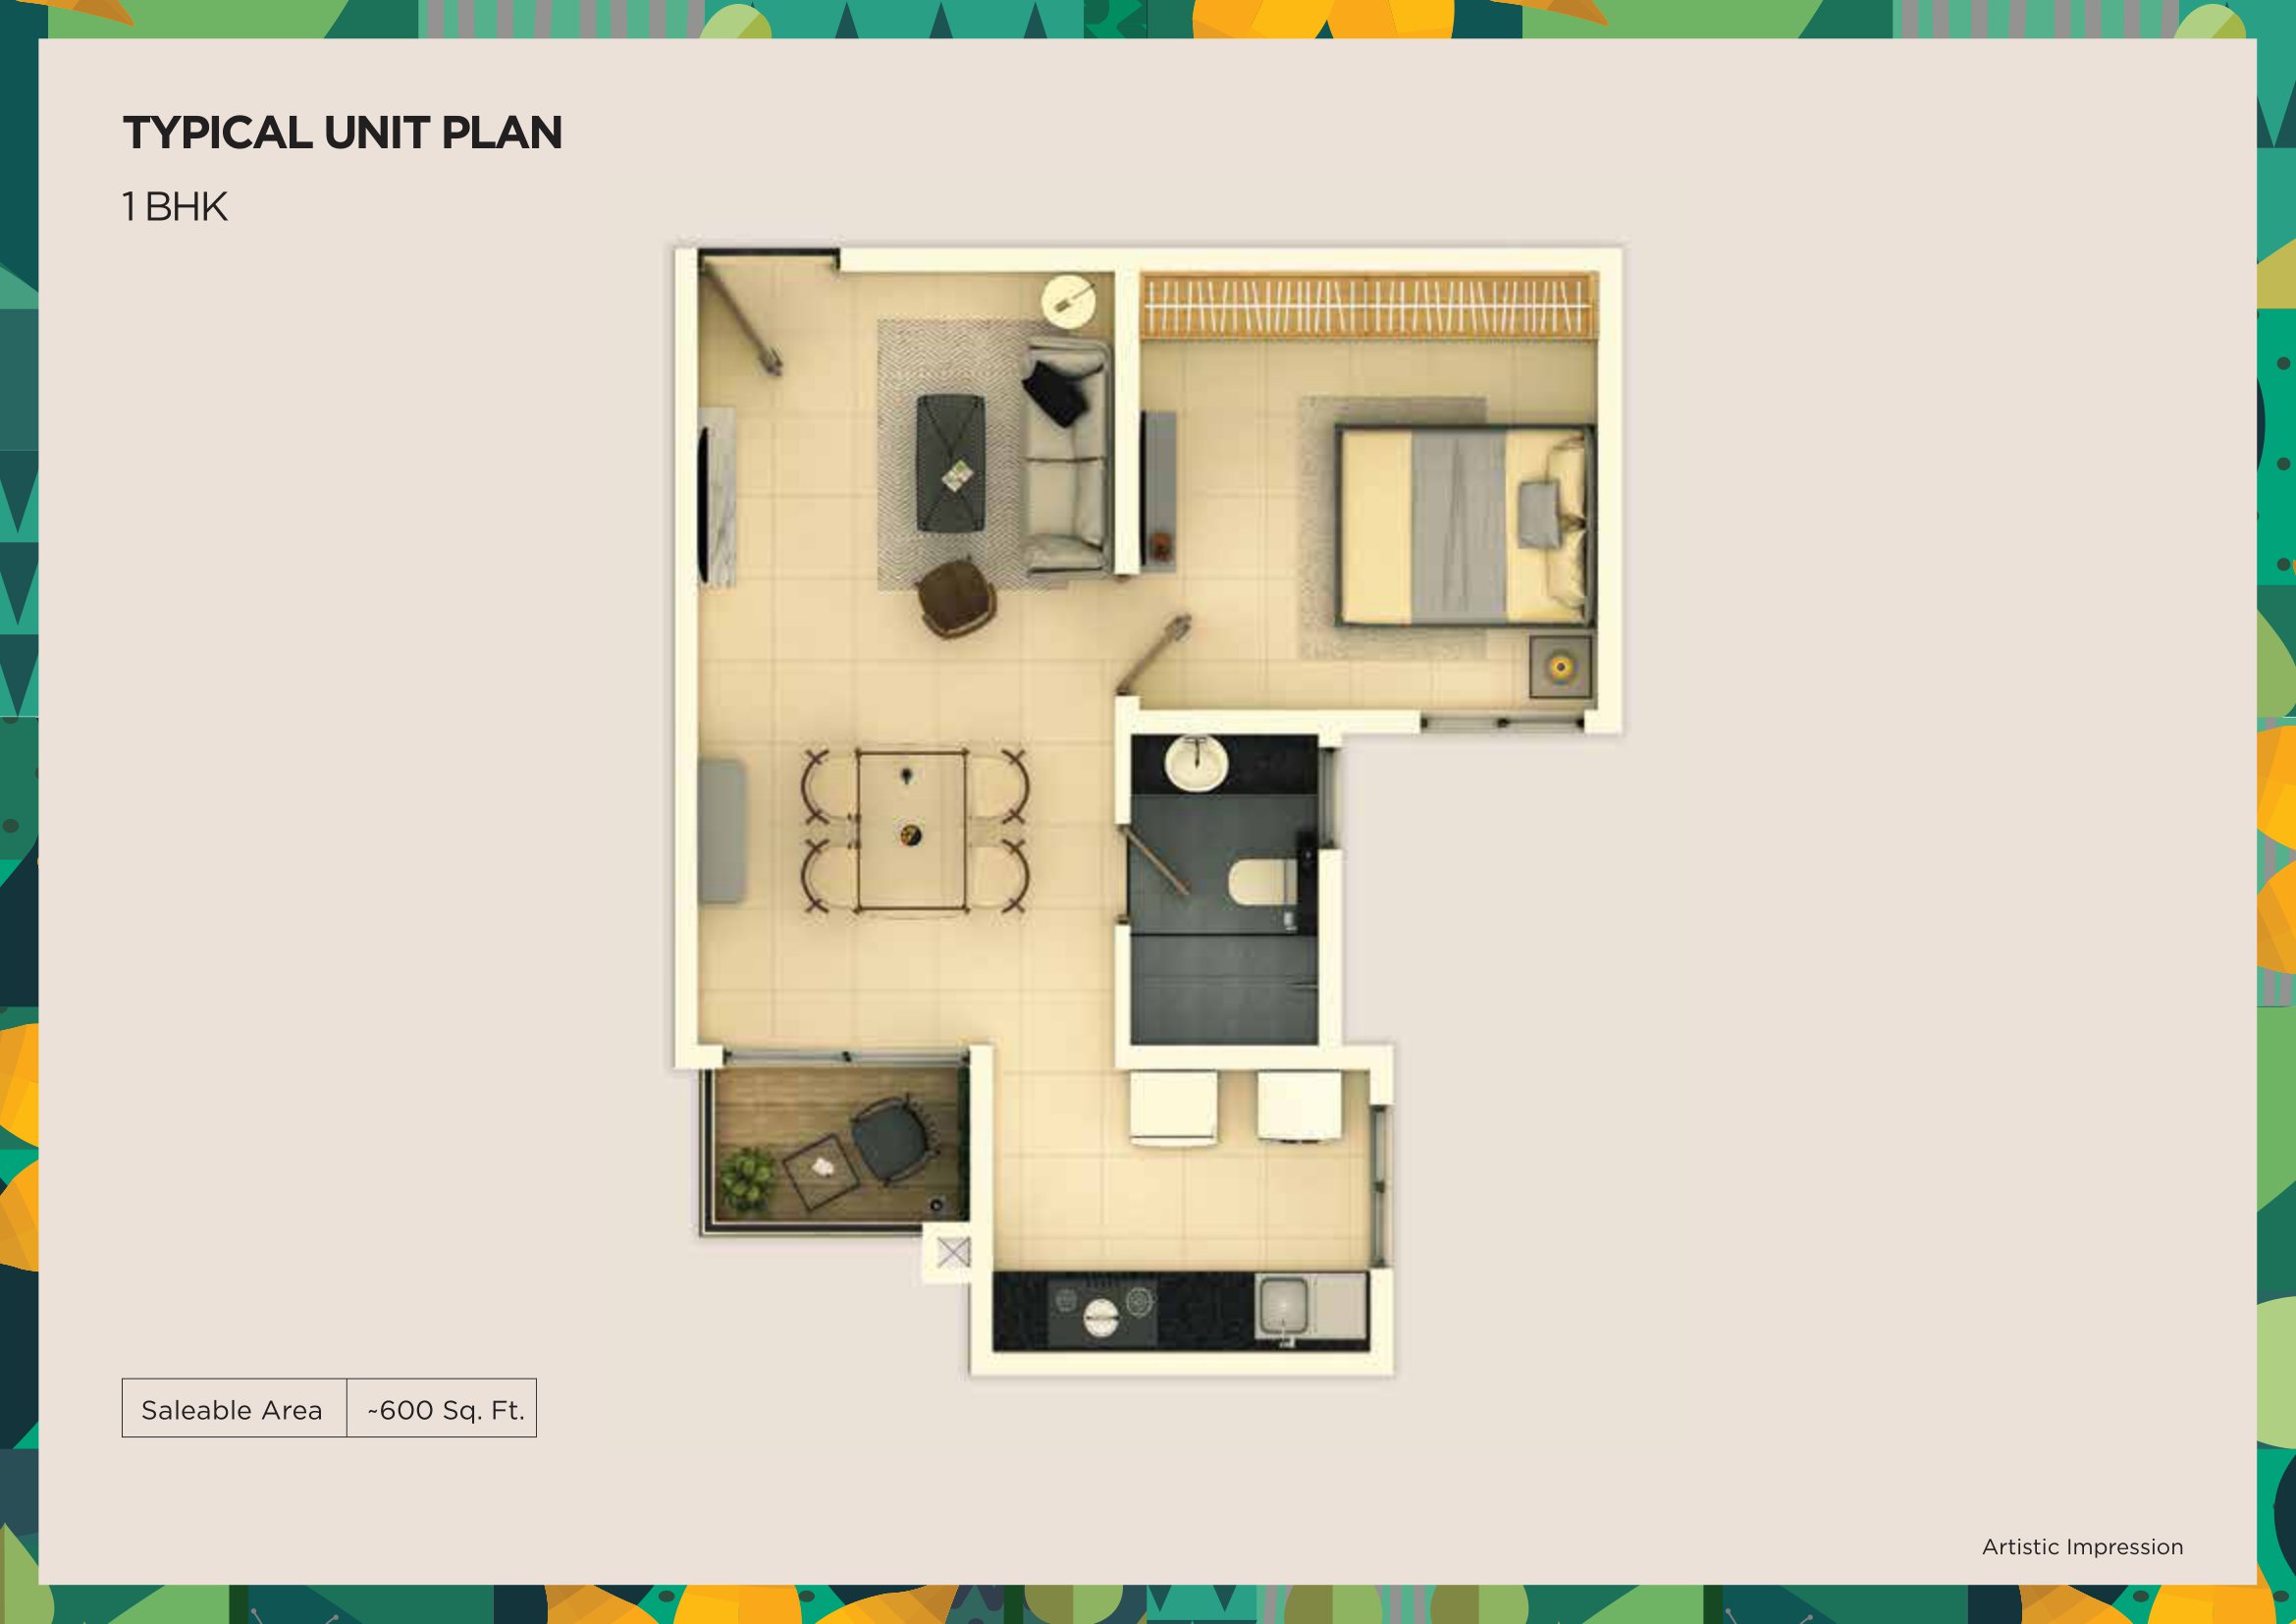 1 BHK 600 Sq Ft Floor Plan